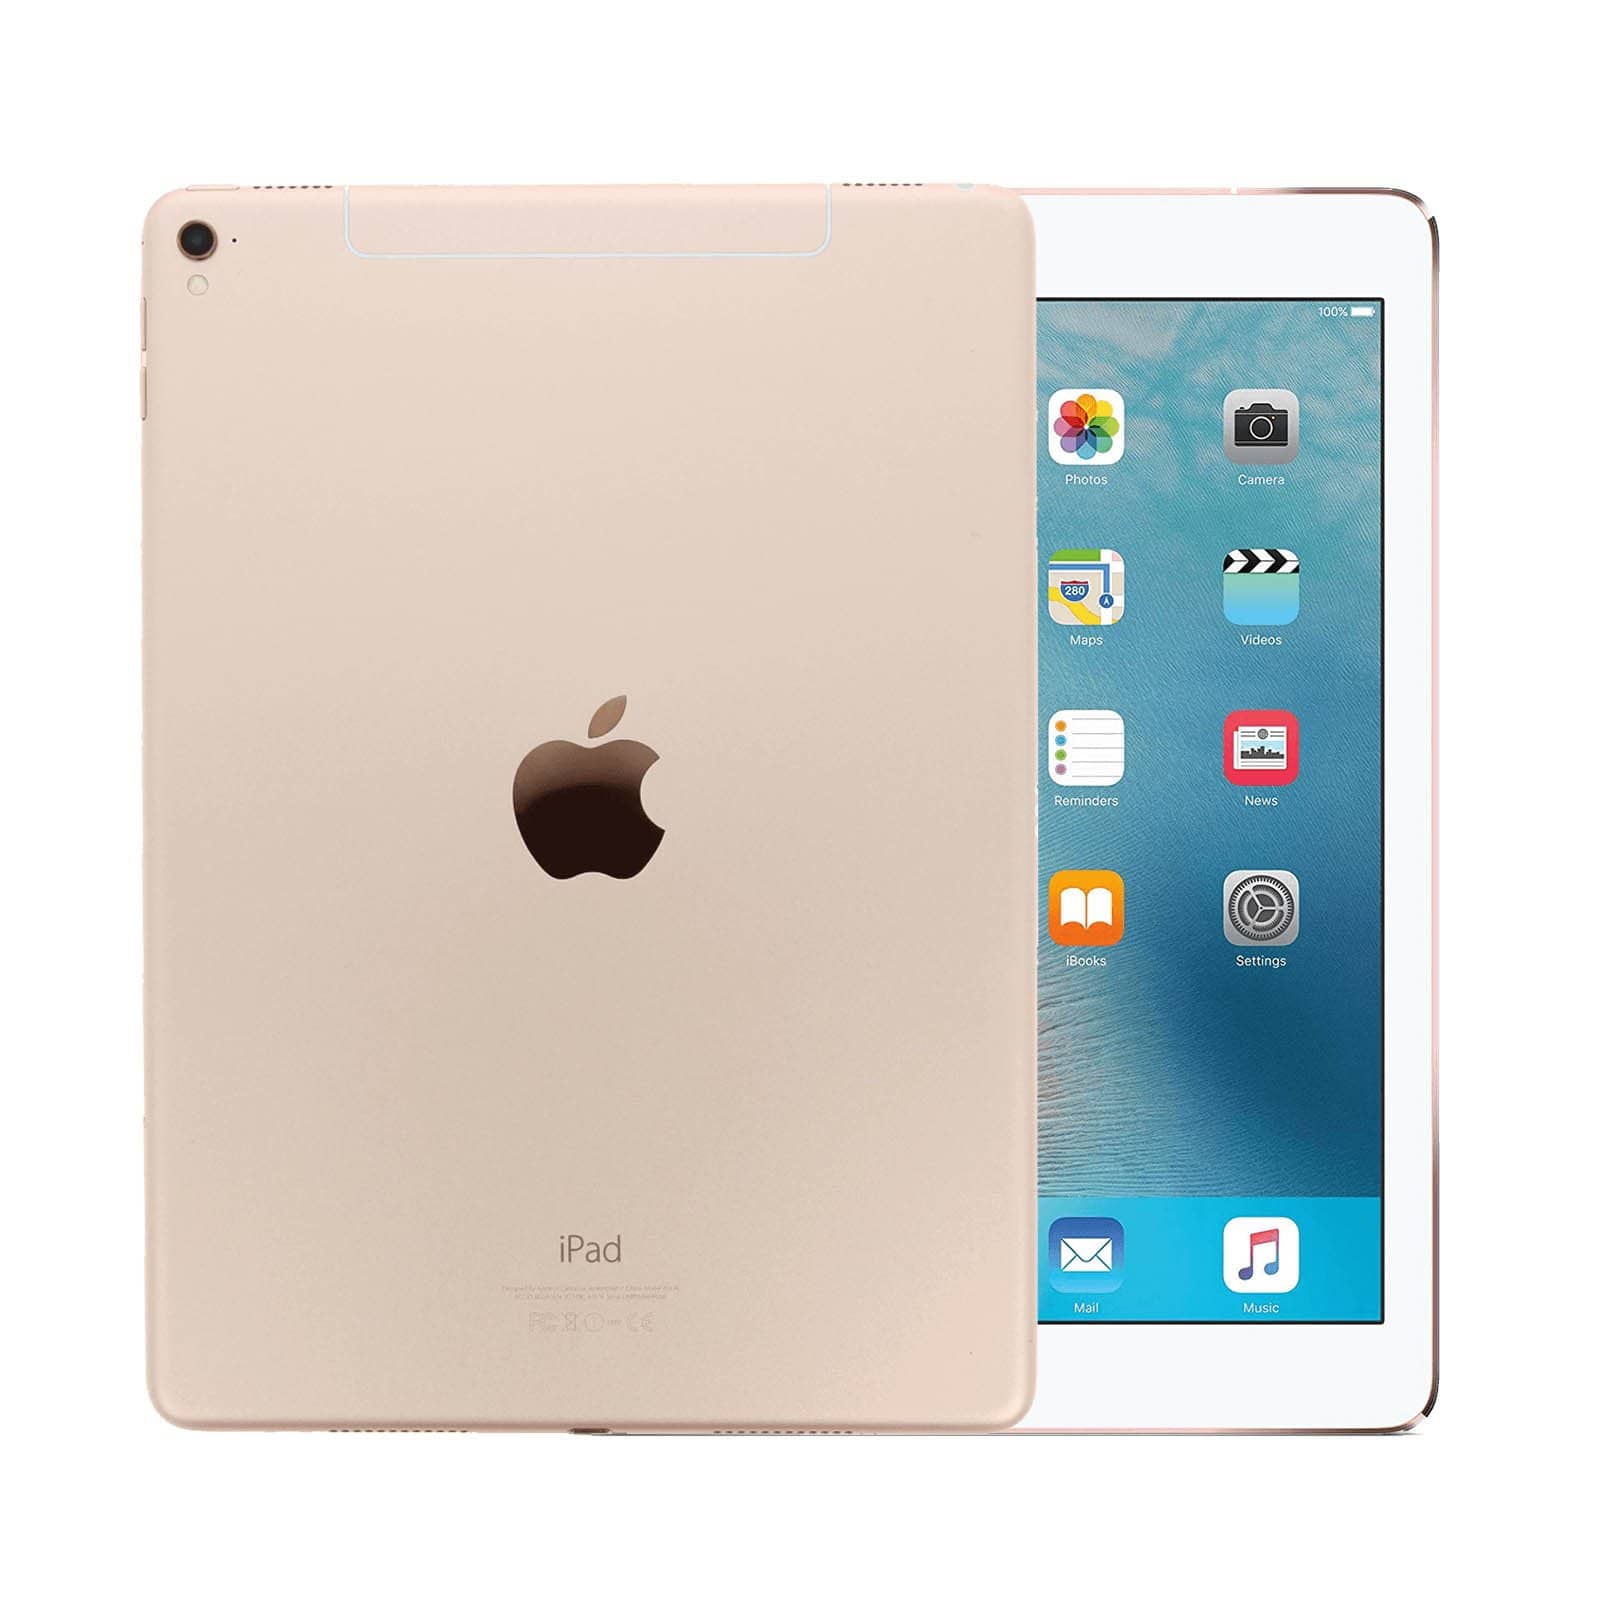 iPad Pro 9.7 Inch 128GB Gold Good - Unlocked 128GB Gold Good